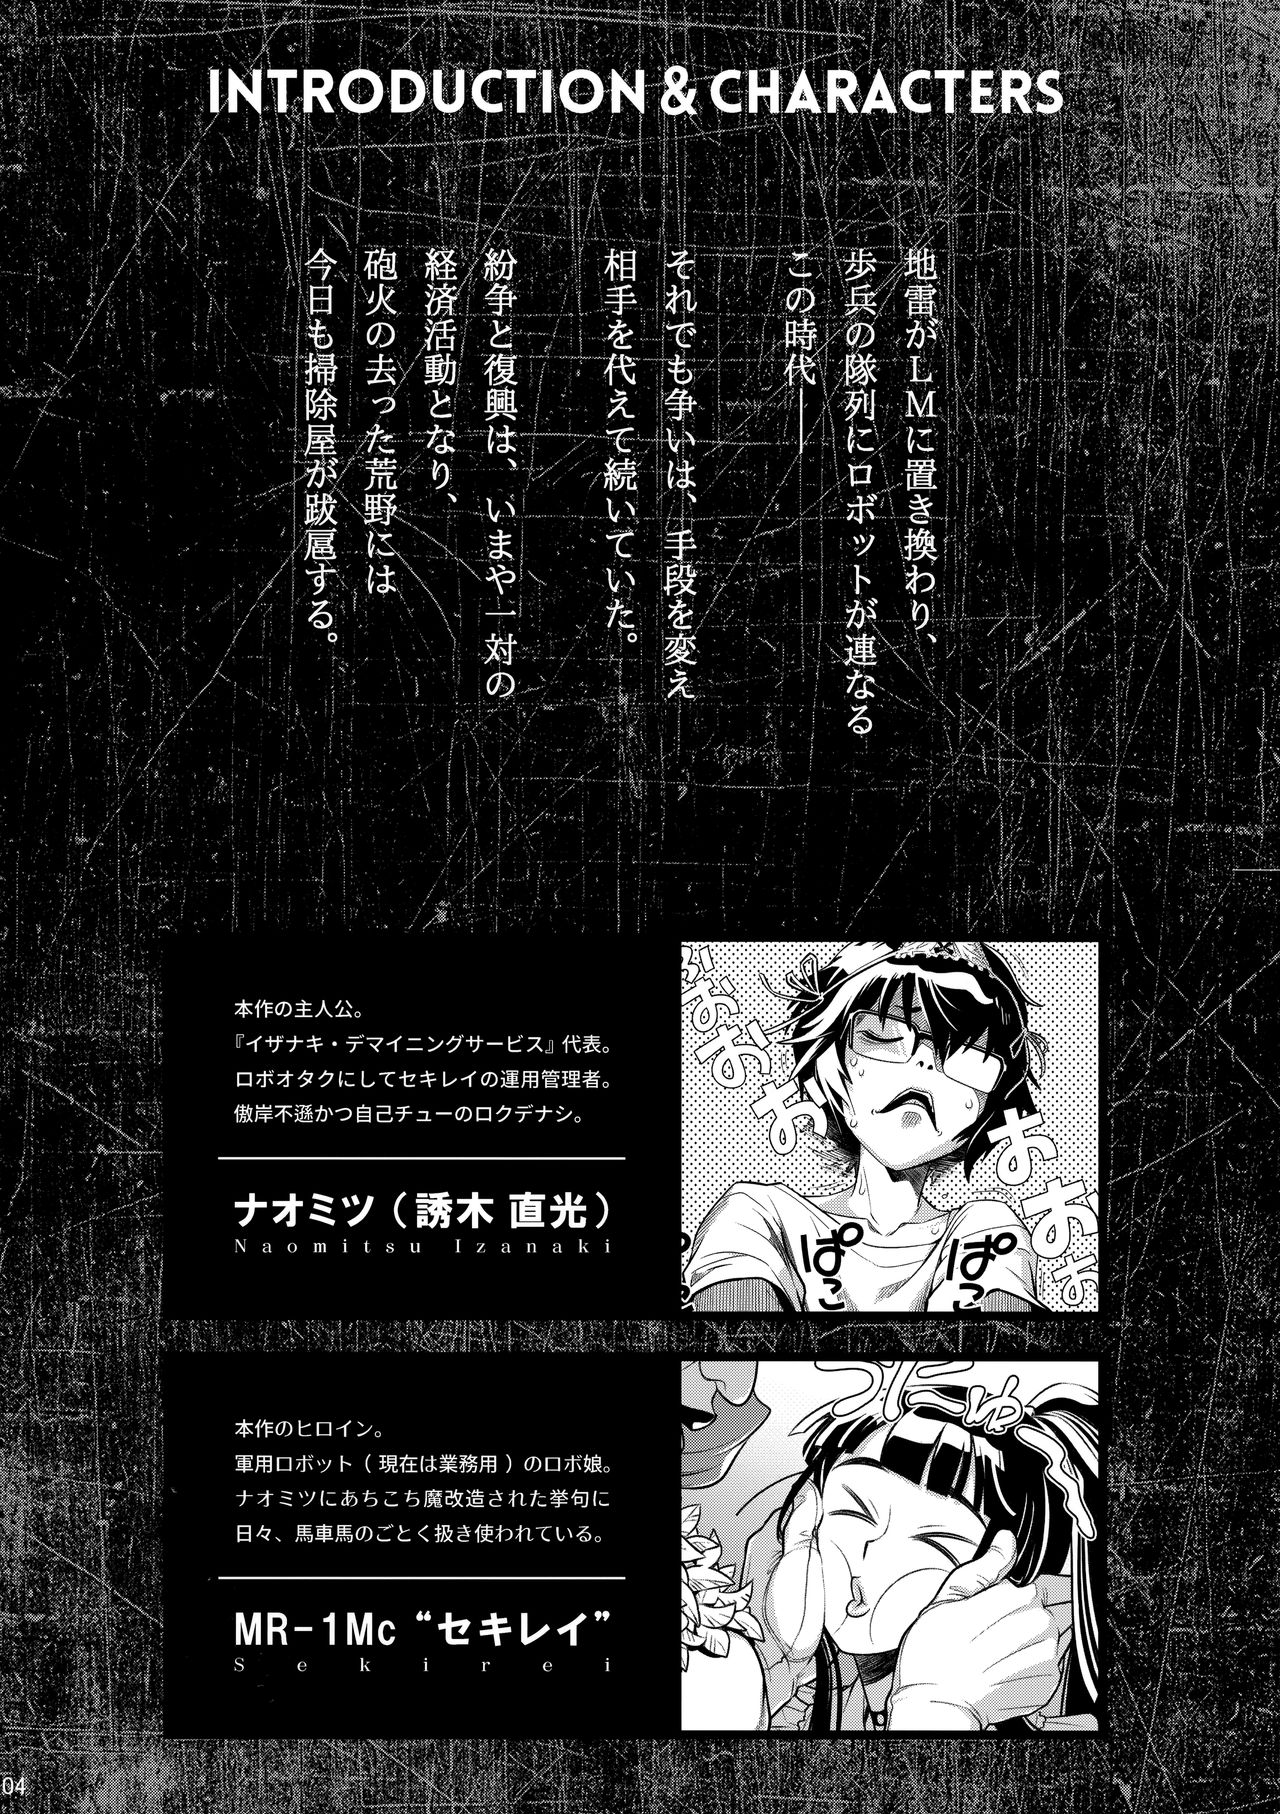 (C93) [Otaku Beam (Ootsuka Mahiro)] MOLLIS MACHINA (C93) [オタクビーム (大塚まひろ)] モリスマキナ